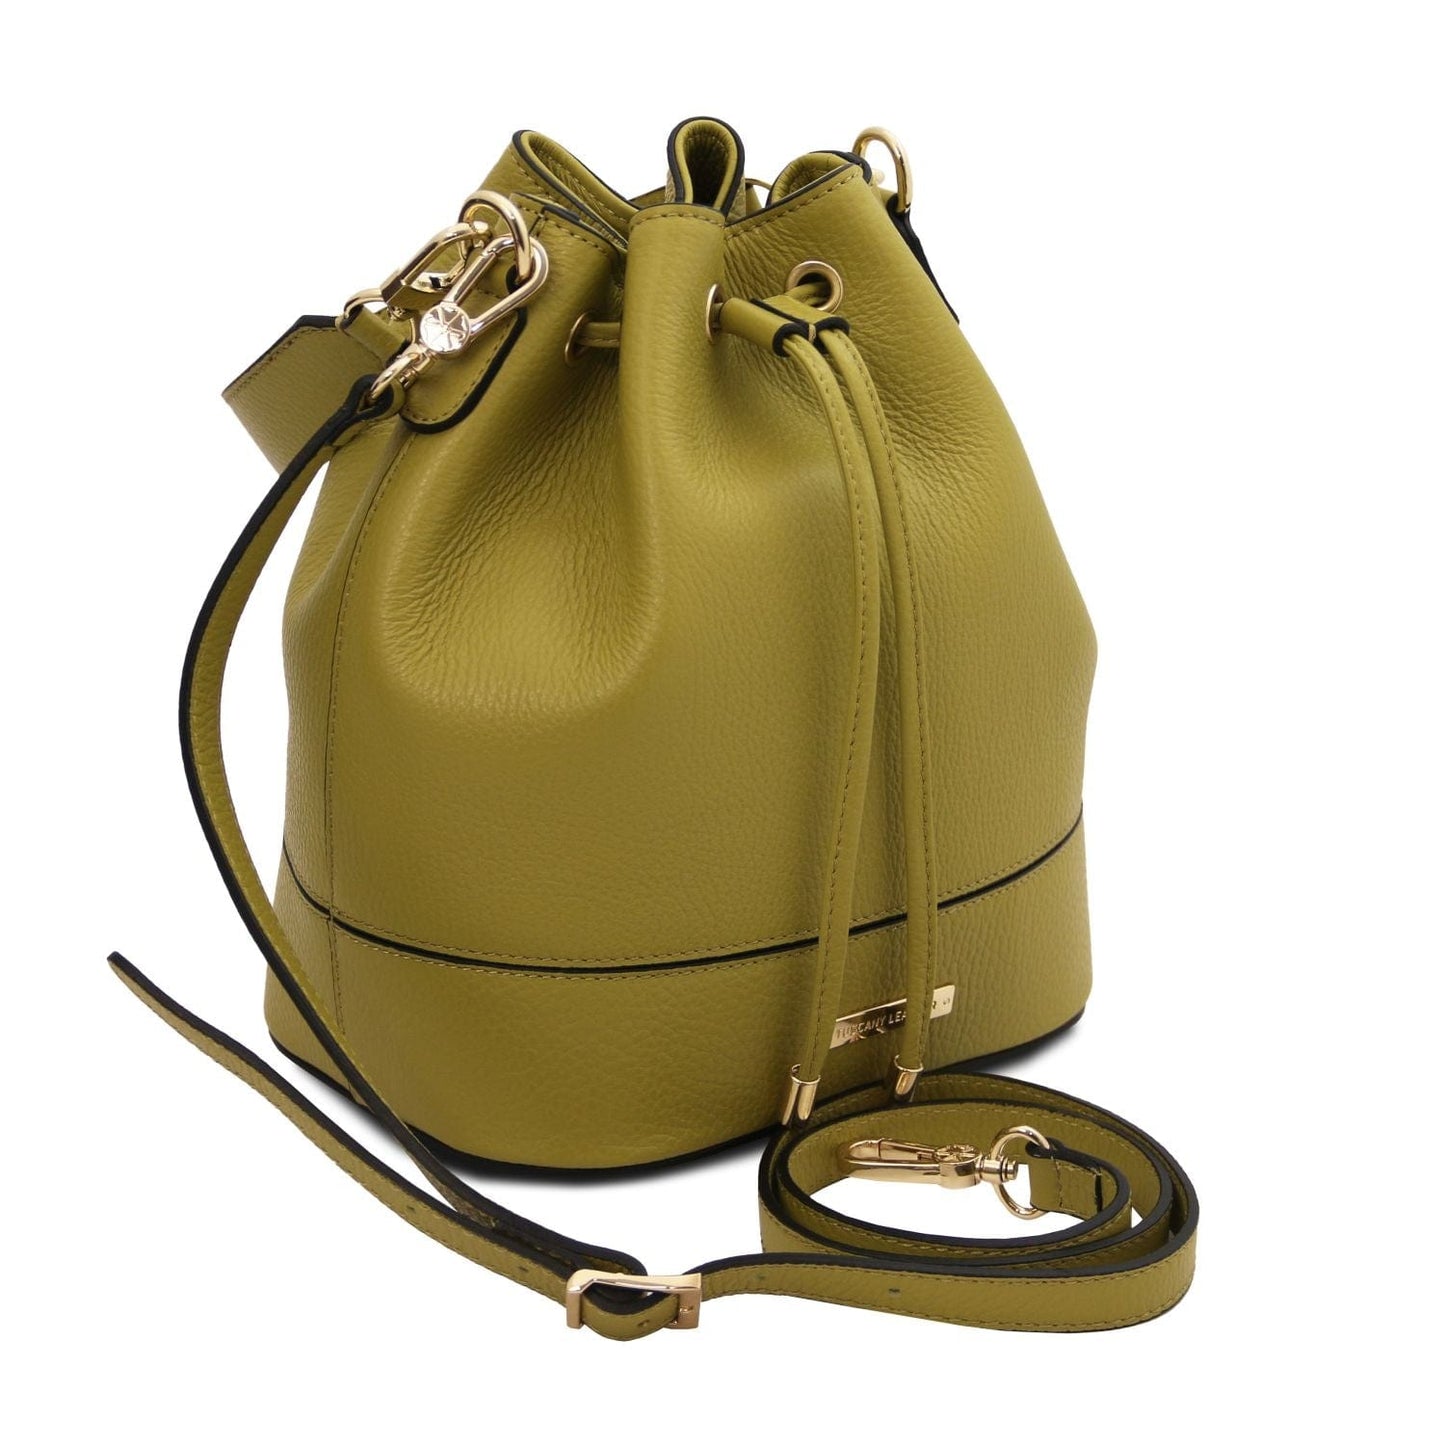 TL Bag - Leather bucket bag | TL142146 - Premium Leather handbags - Shop now at San Rocco Italia